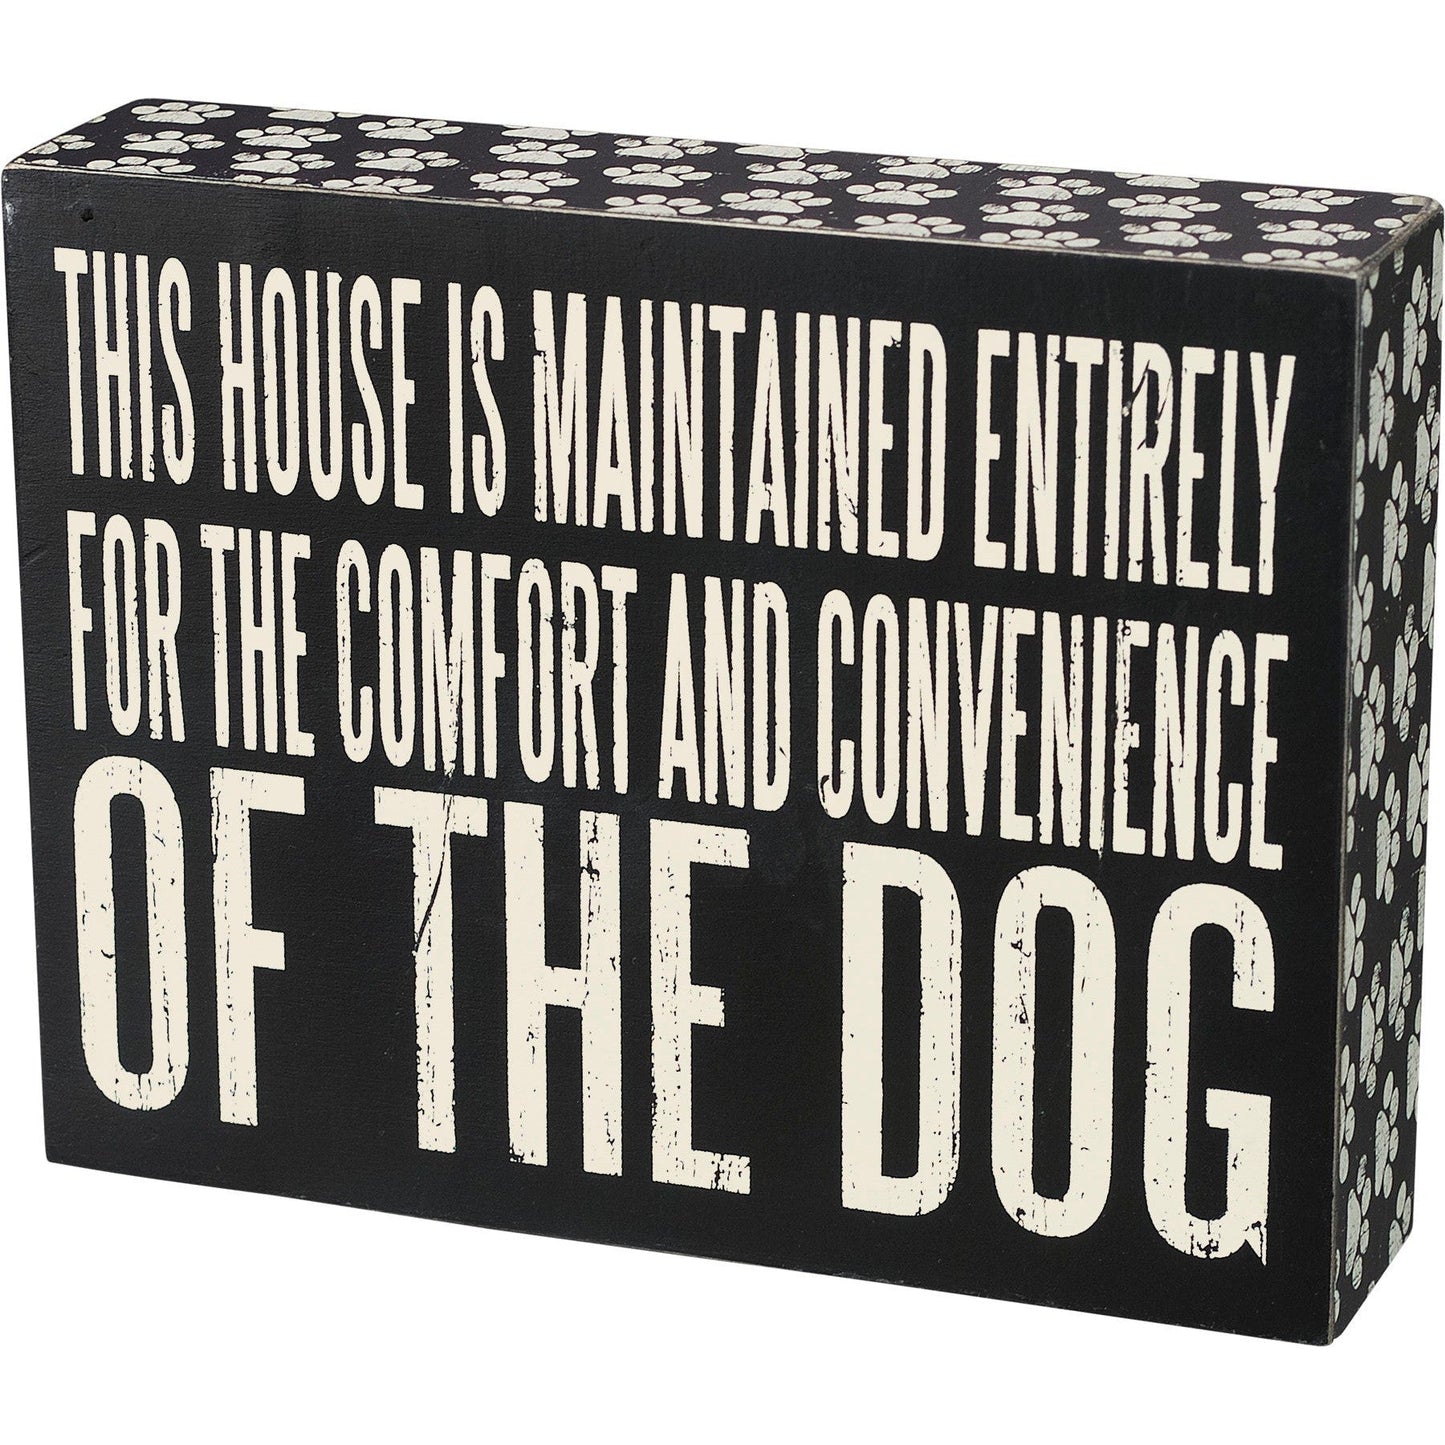 Comfort Dog Box Sign | Black And White Wooden Box Decor | 7.50" x 5.75"